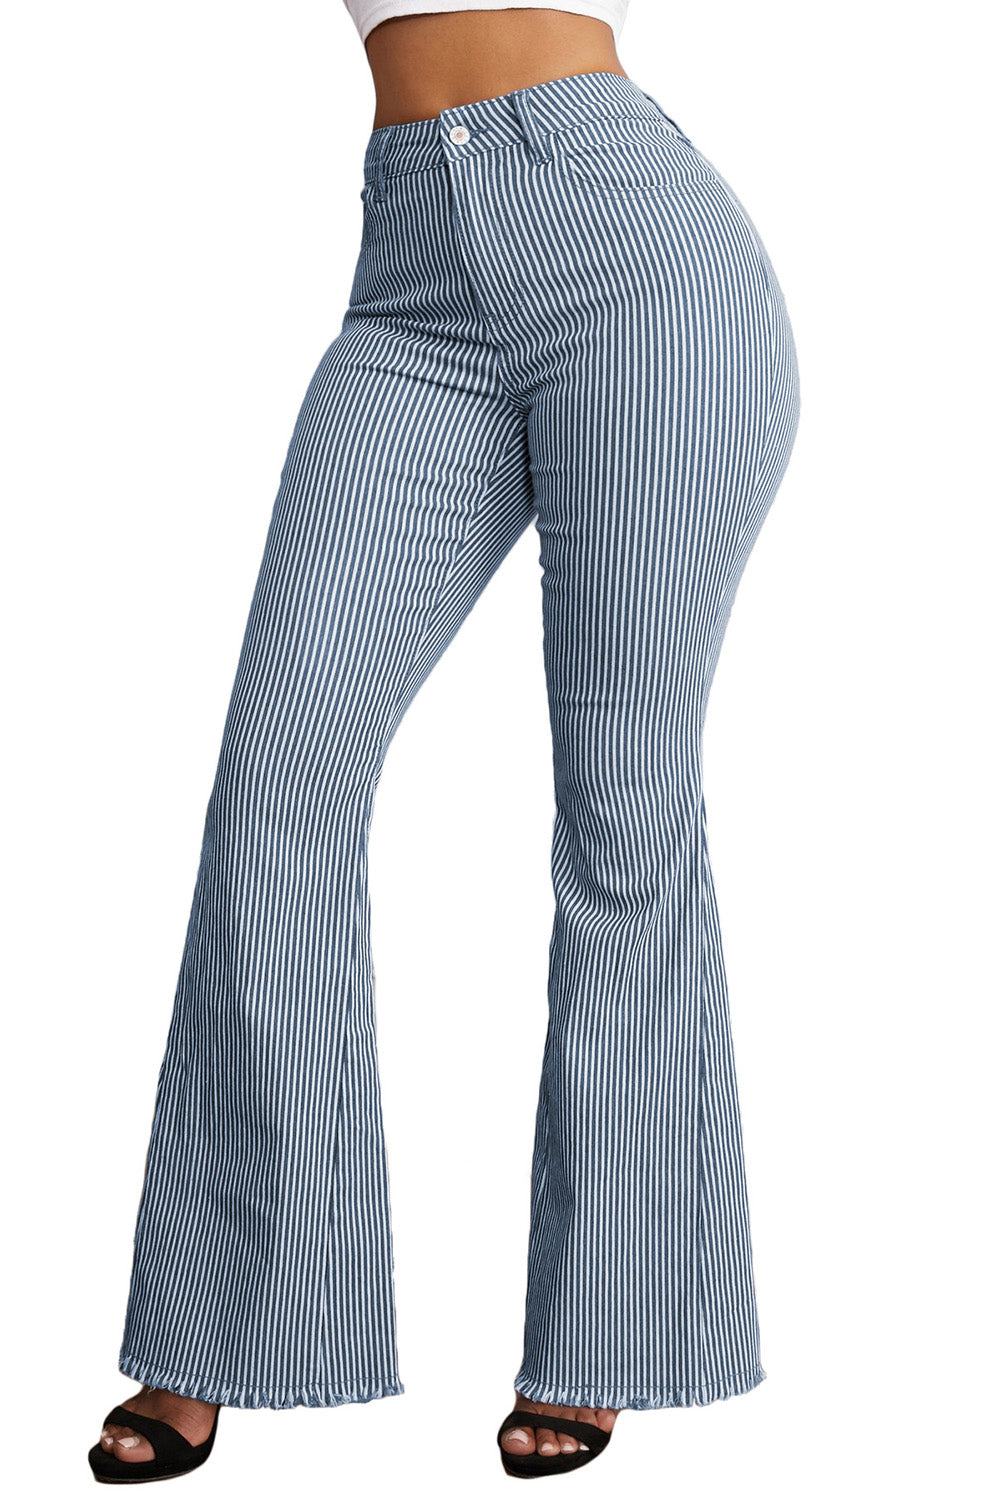 - Light Blue Stripe Casual Mid Waist Women's Bell Bottom Jeans - womens jeans at TFC&H Co.